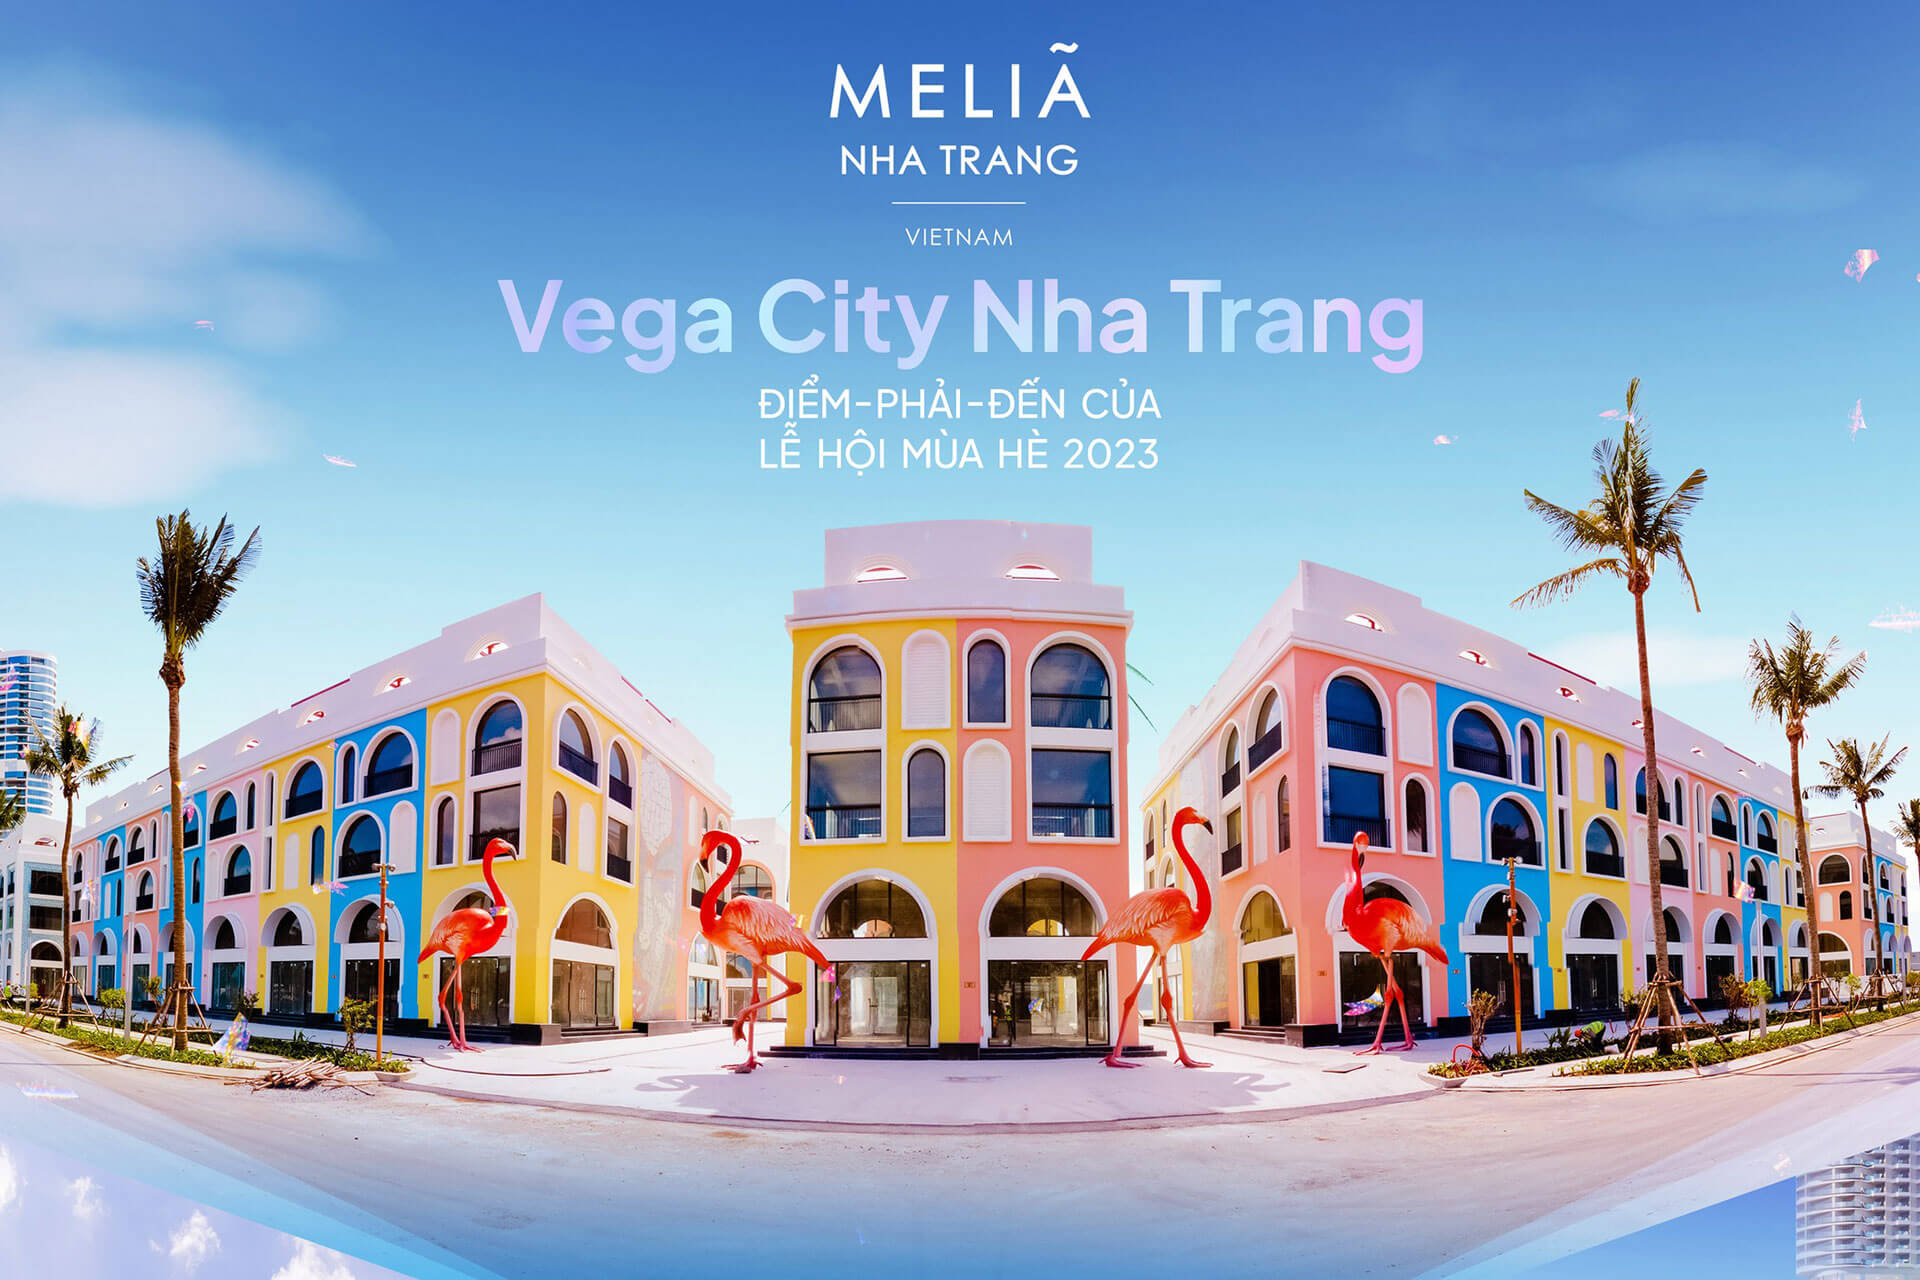 Vega City Nha Trang